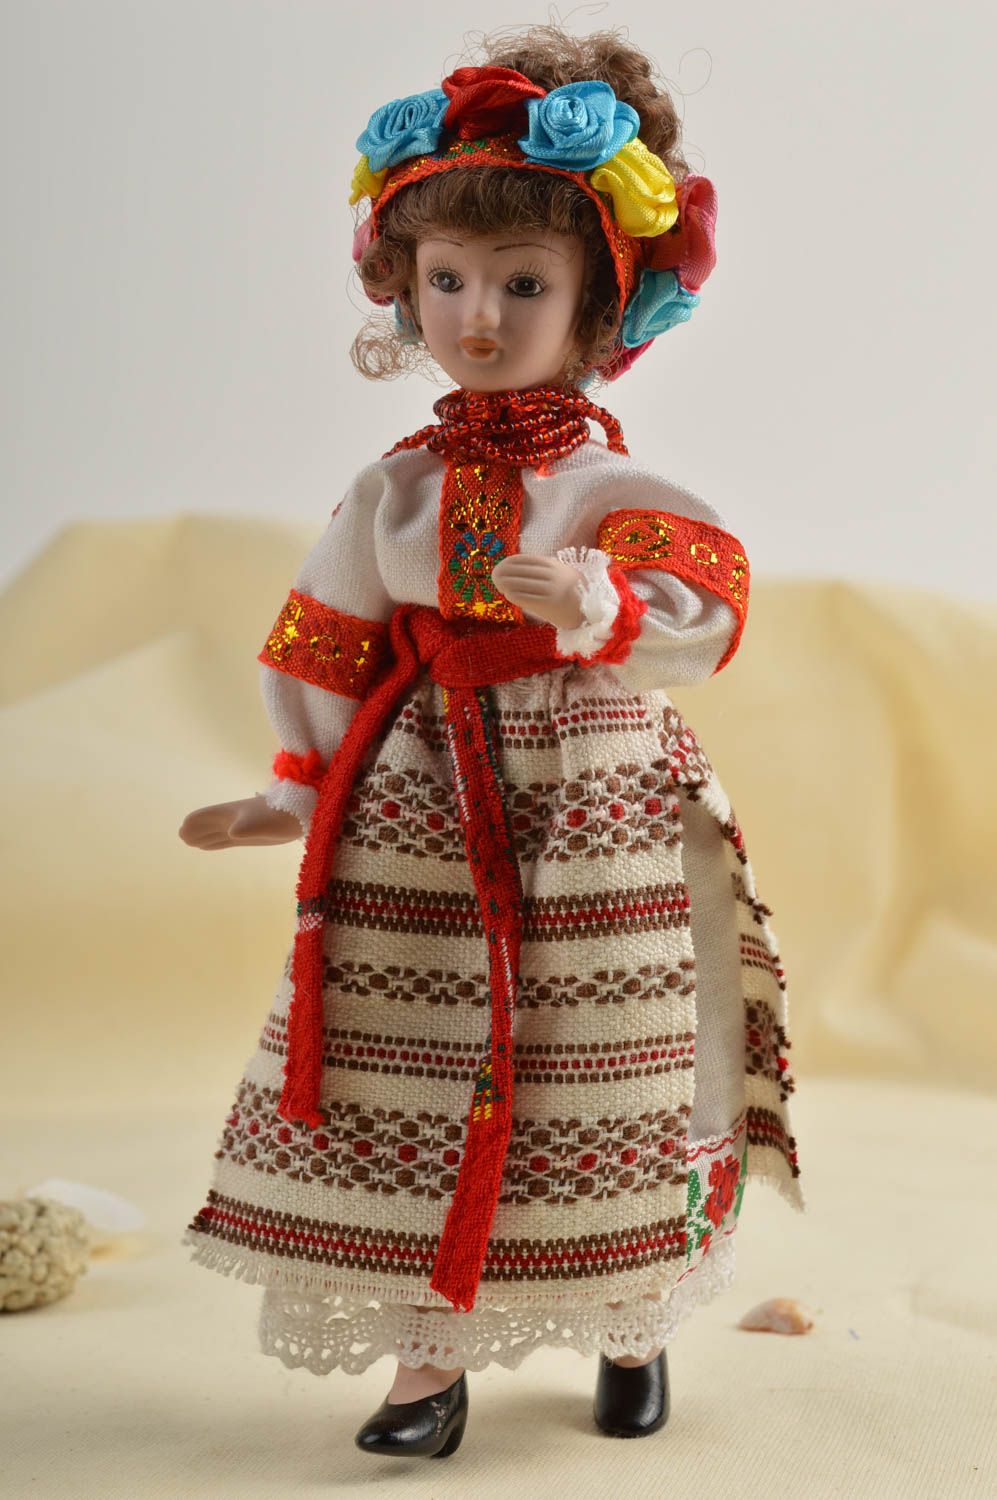 Collectible dolls folk dolls toys for children nursery decor home decor photo 1